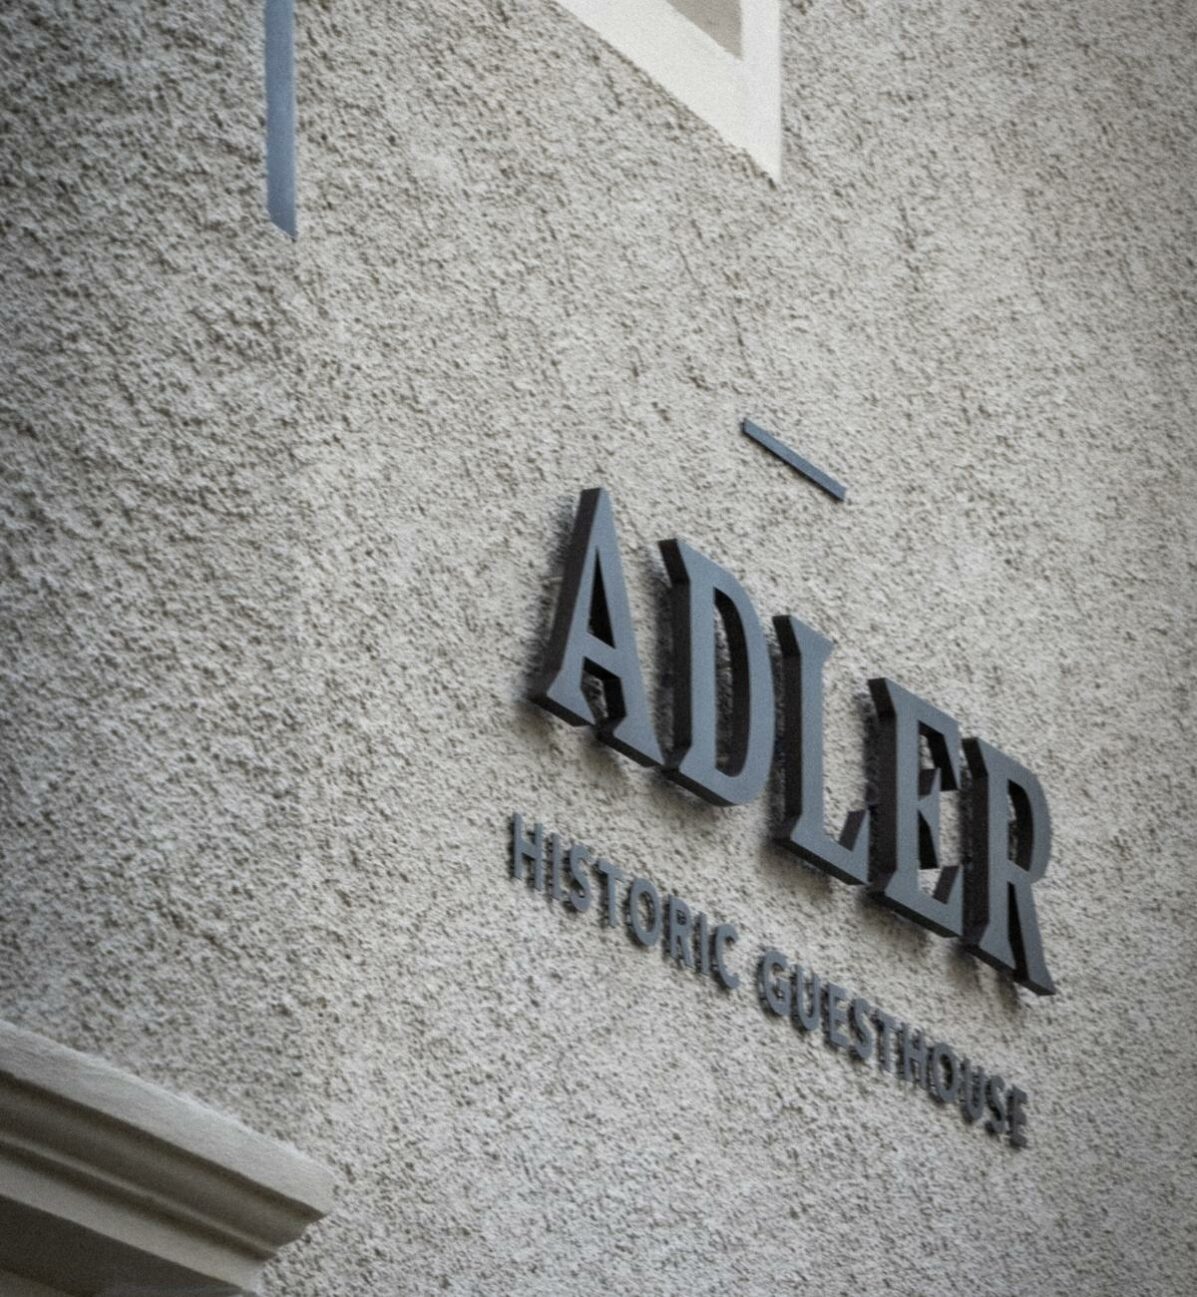 Historic Guesthouse Adler – Brixen